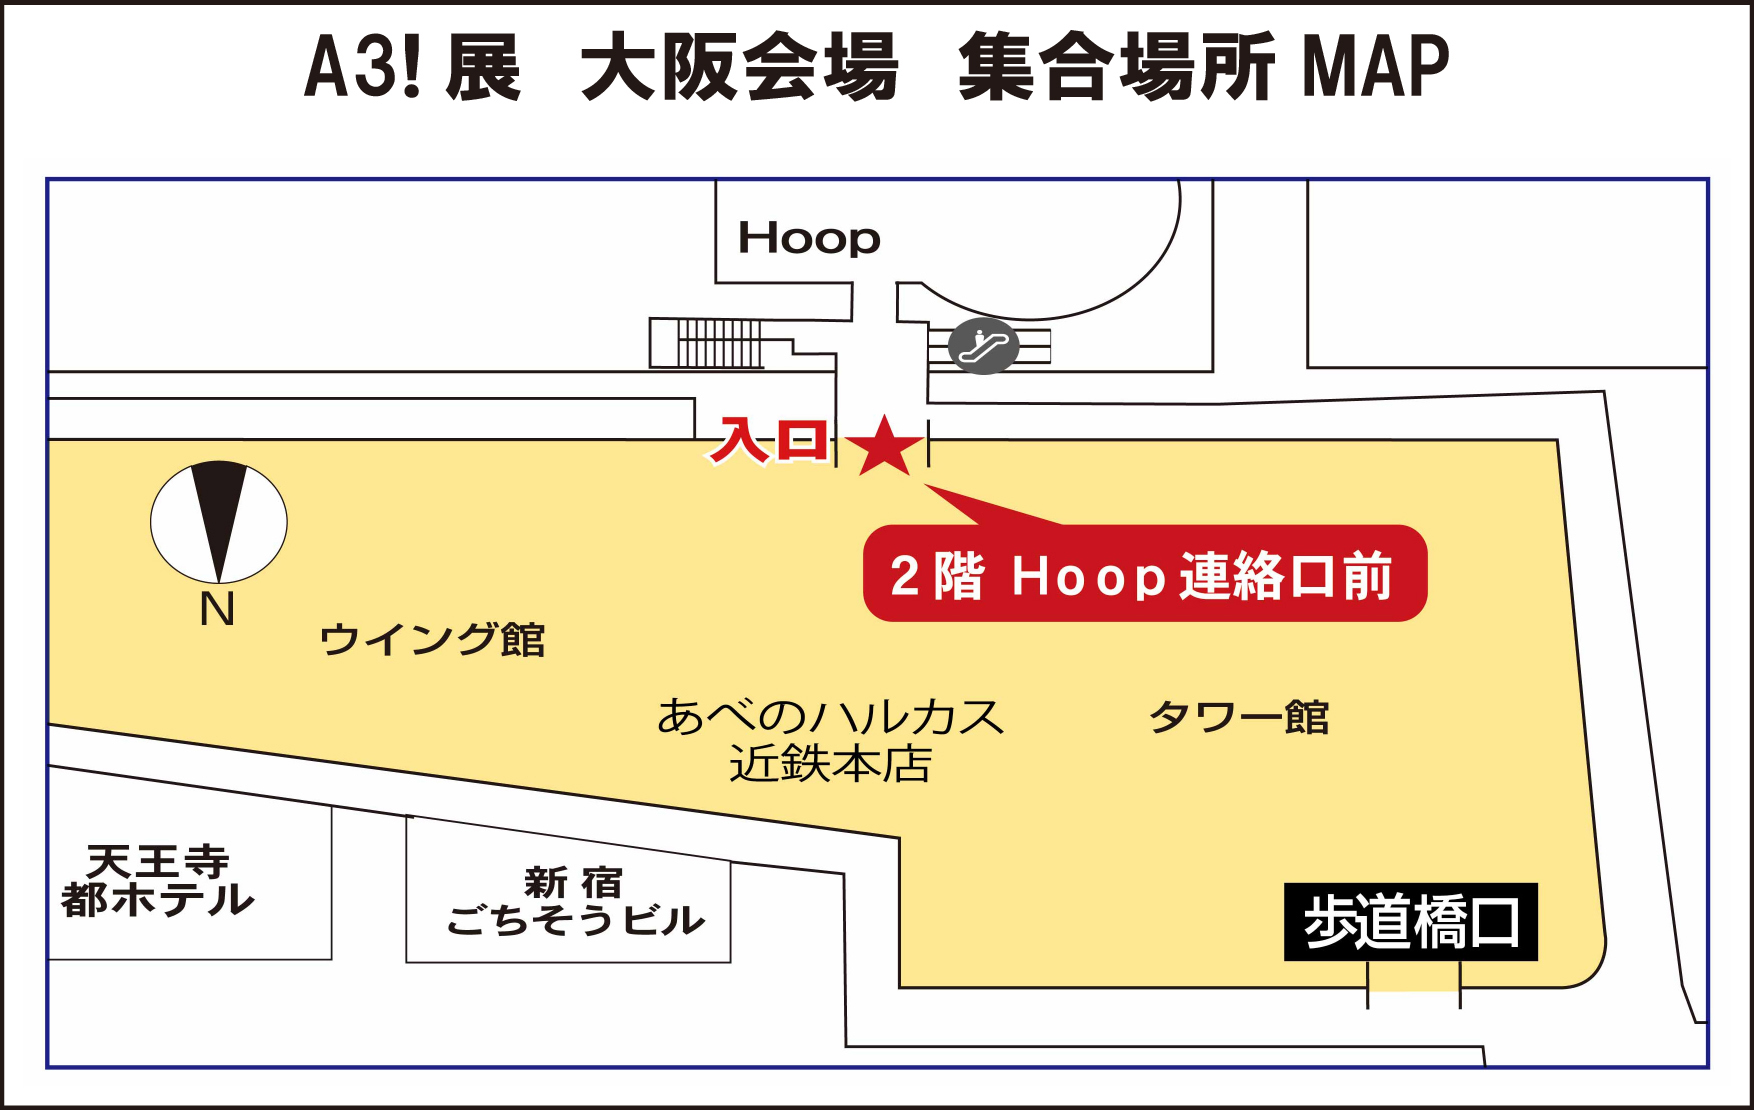 A3!展 大阪会場集合場所MAP